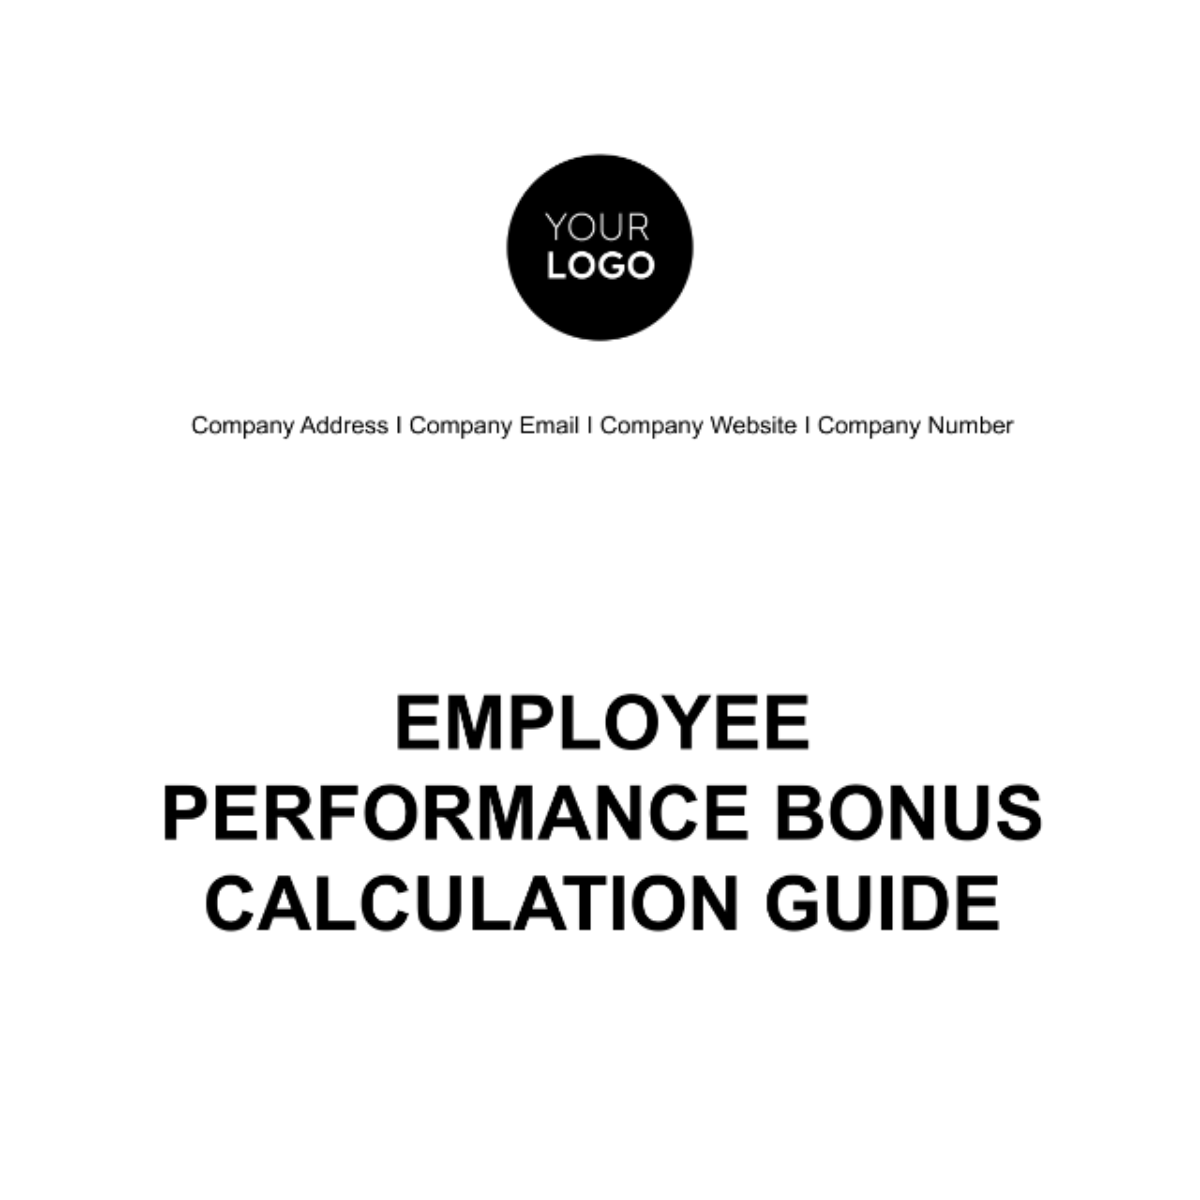 Employee Performance Bonus Calculation Guide HR Template